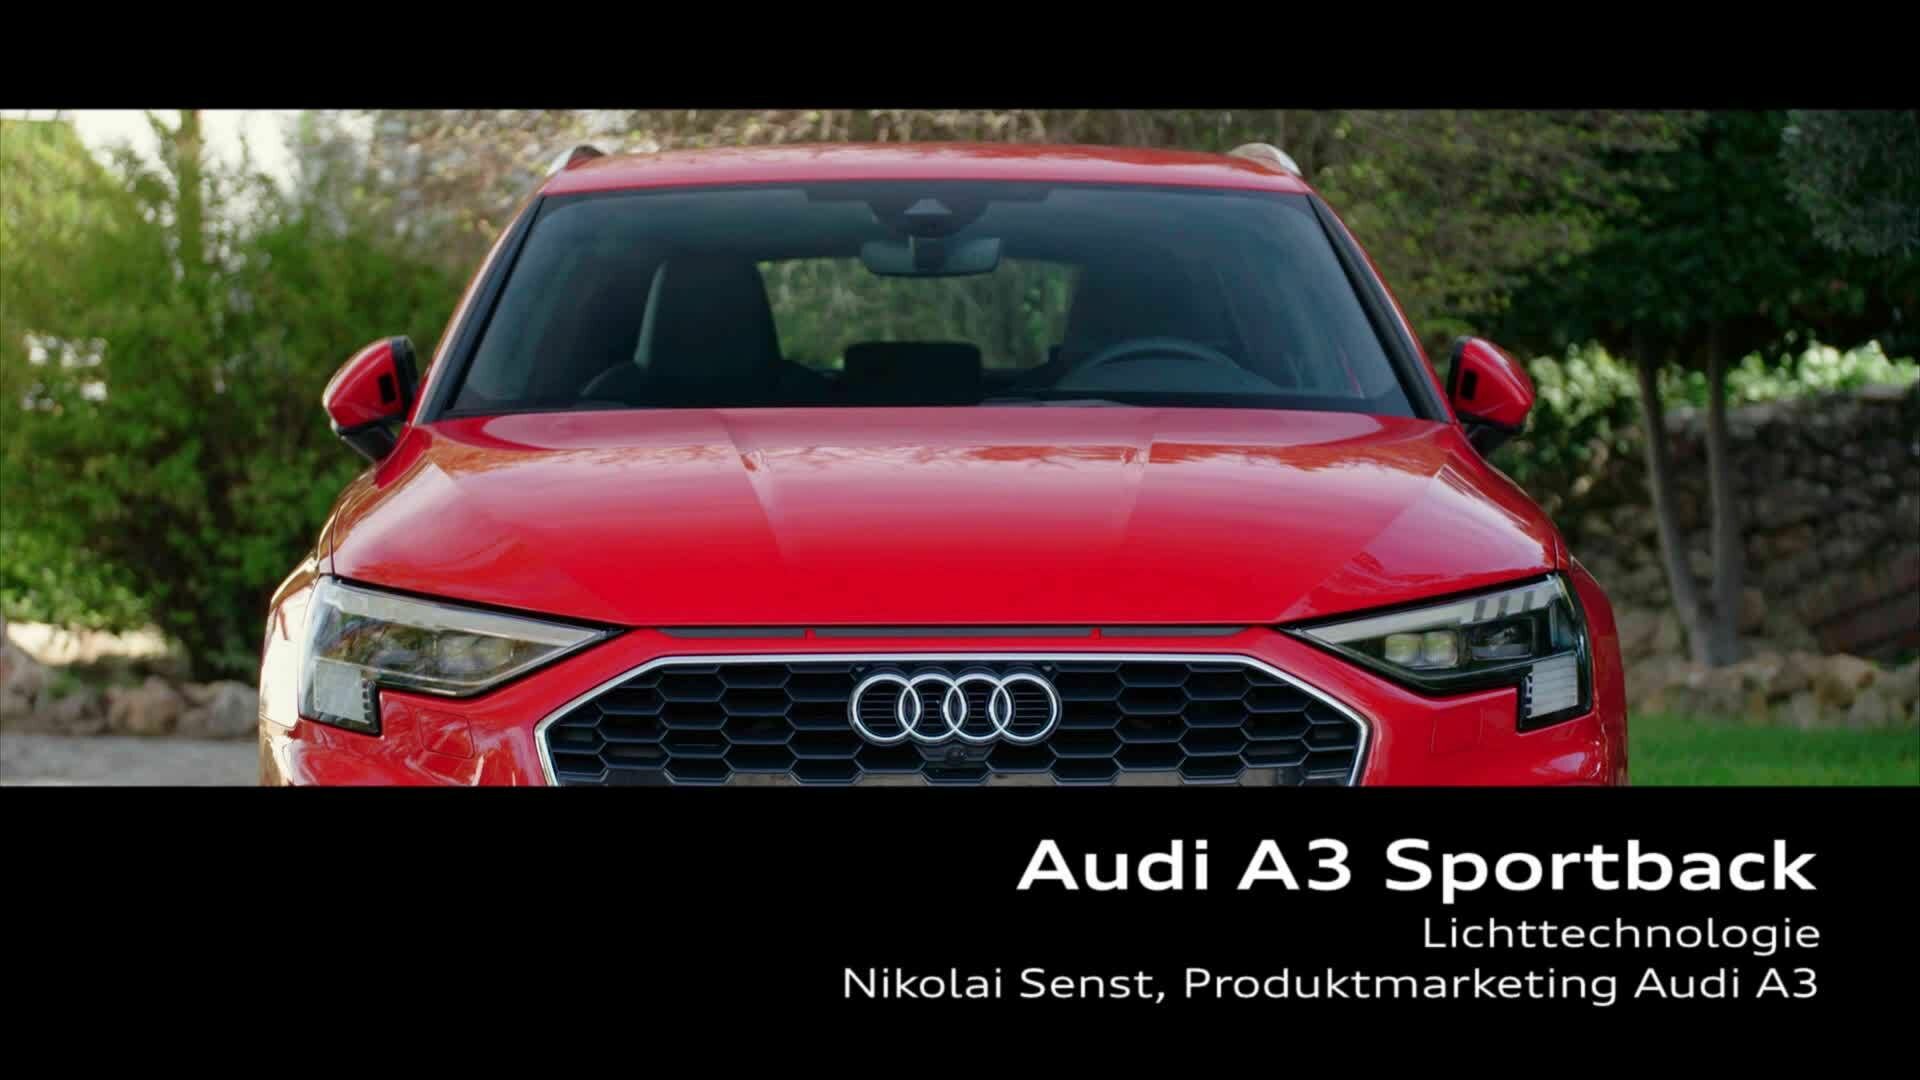 Footage: Audi A3 Sportback – Lichttechnologie